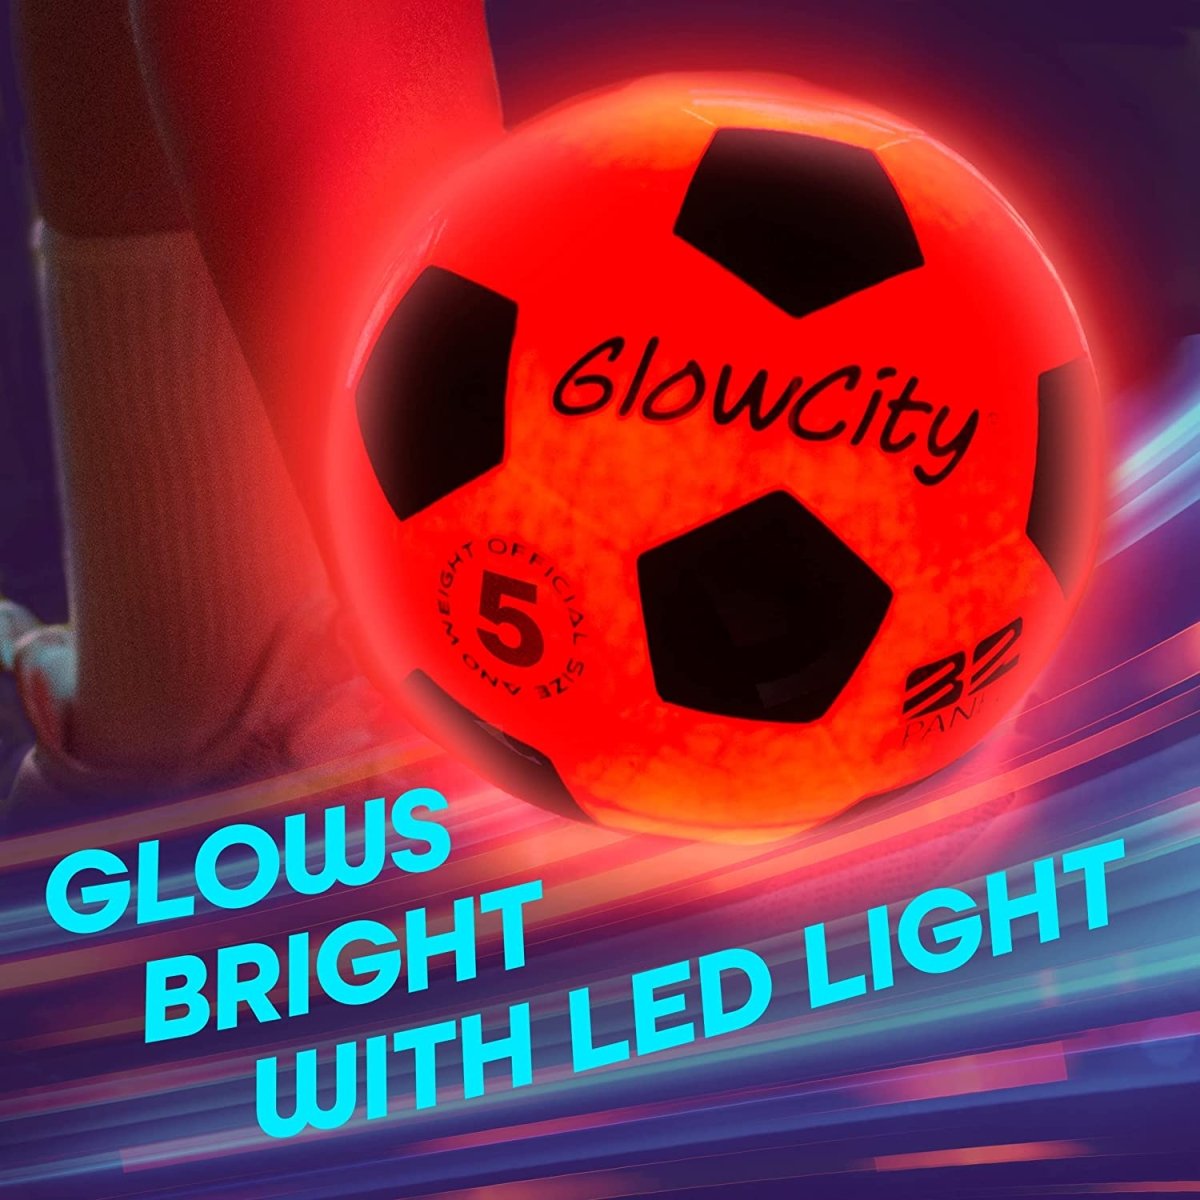 GlowCity Glow in The Dark Soccer Ball - The California Beach Co.